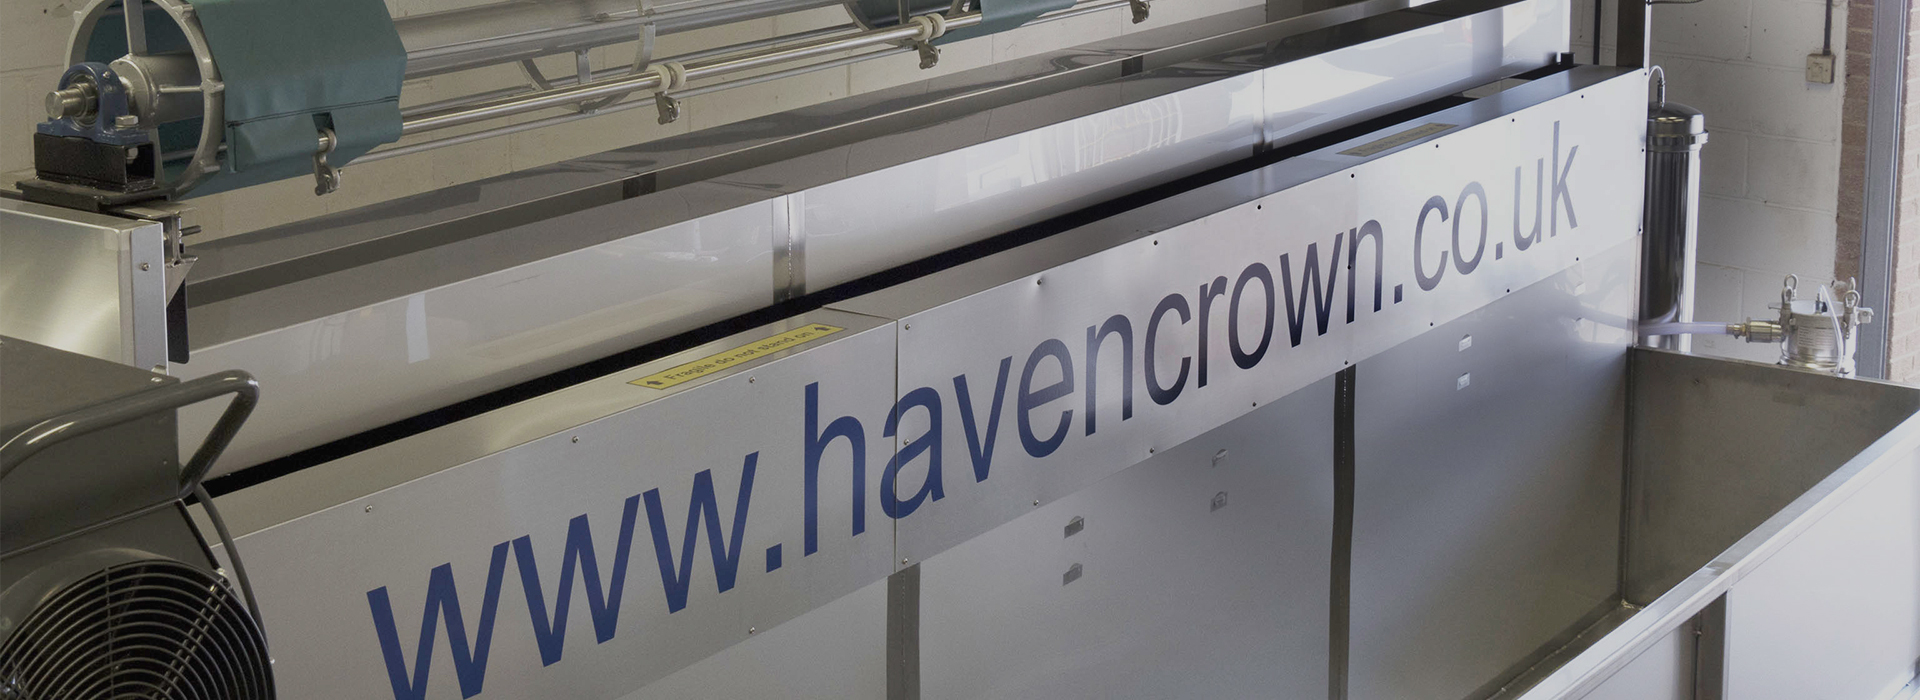 havencrown-slideshow-2.jpg